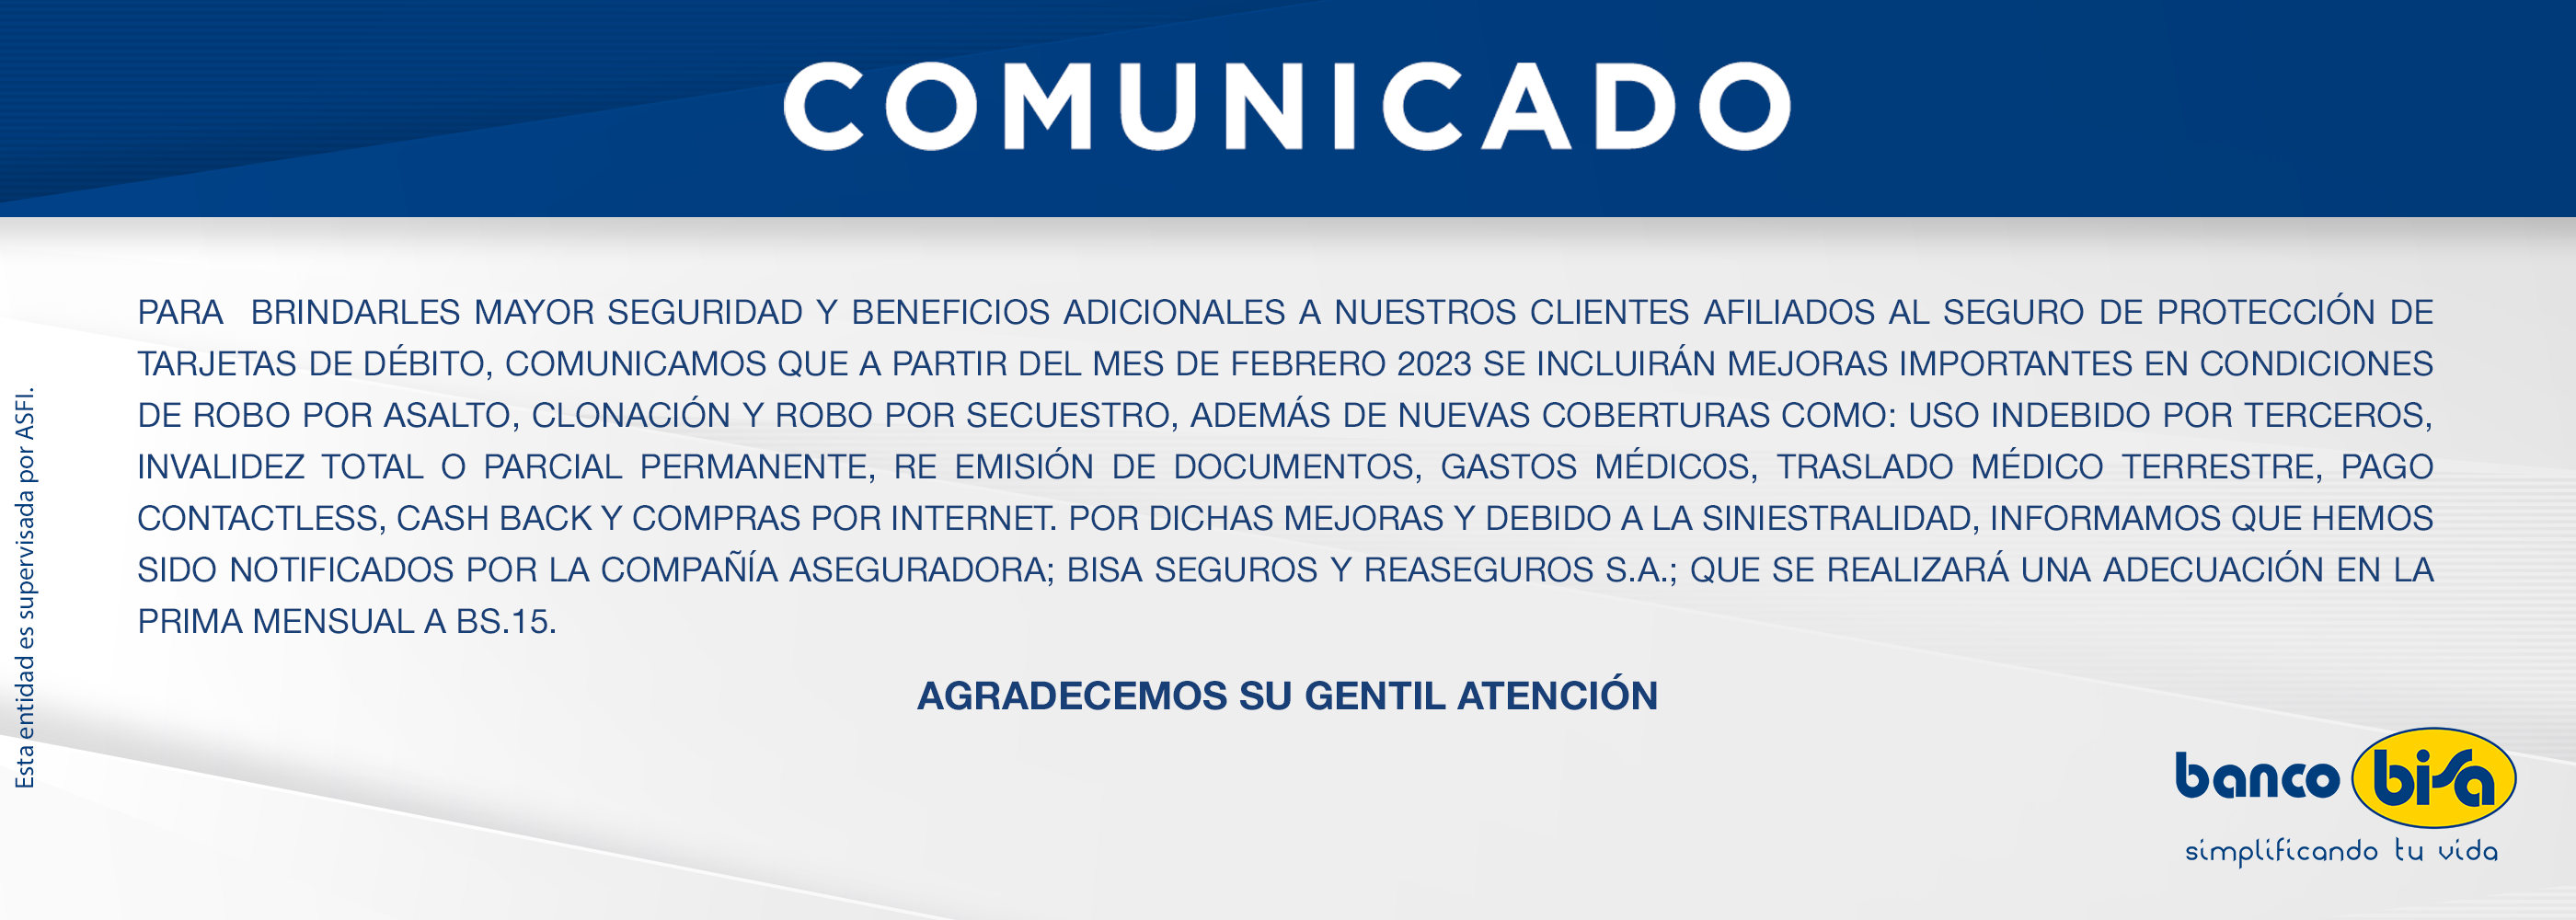 COMUNICADO_CAMBIO DE PRIMA TARJETA DEBITO_2800x1000.png